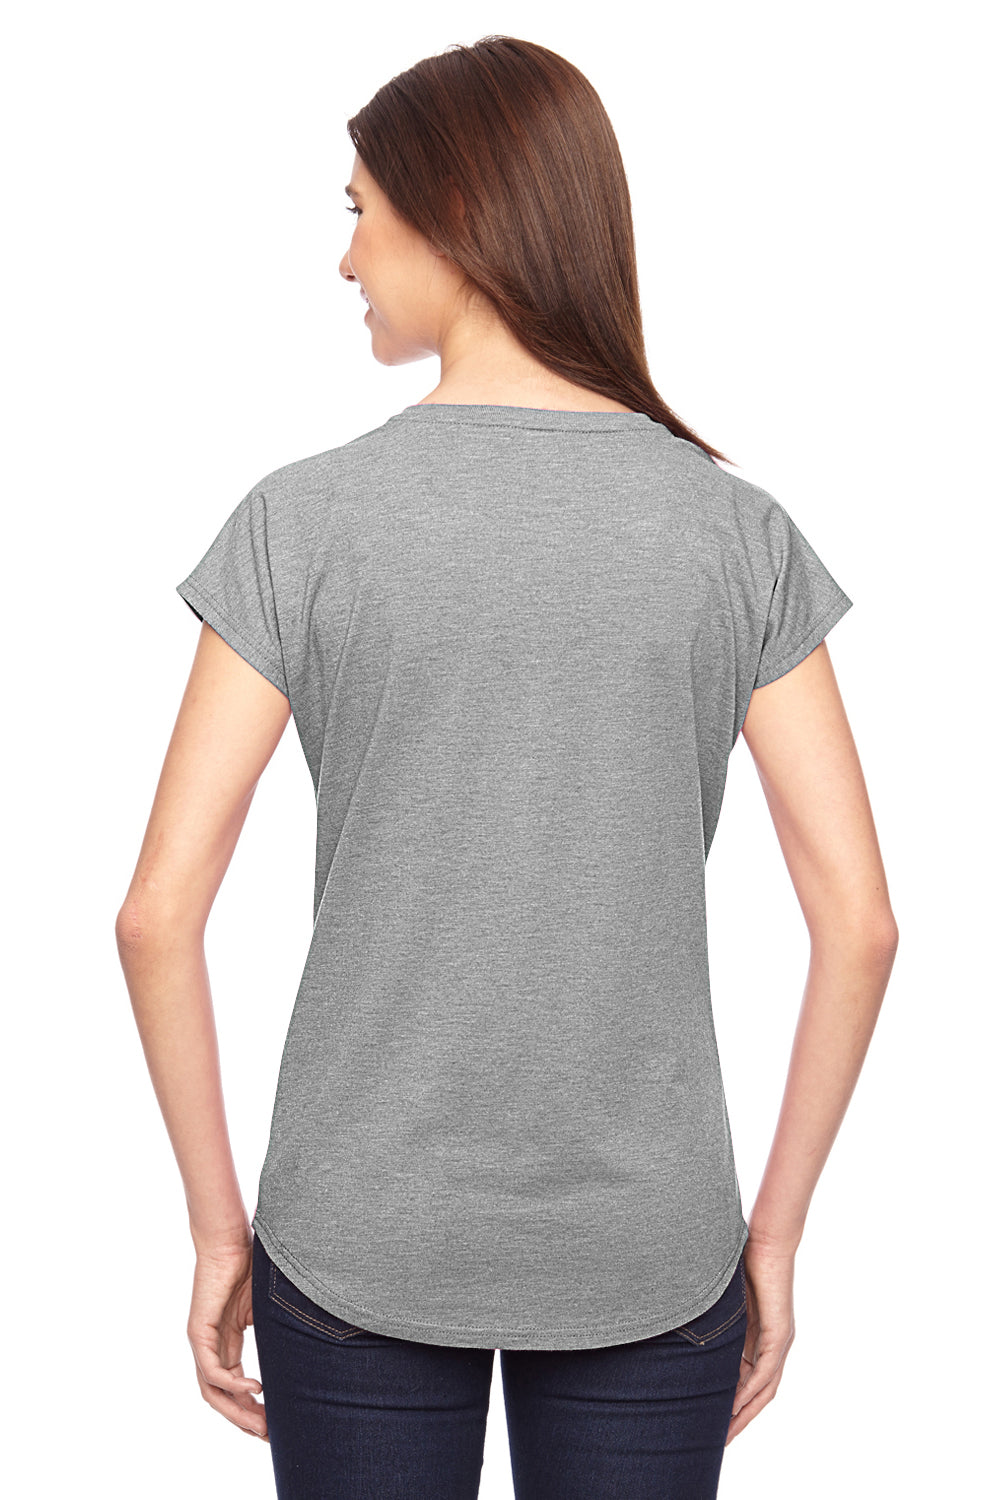 Anvil Womens Short Sleeve V-Neck T-Shirt 6750VL - BigTopShirtShop.com